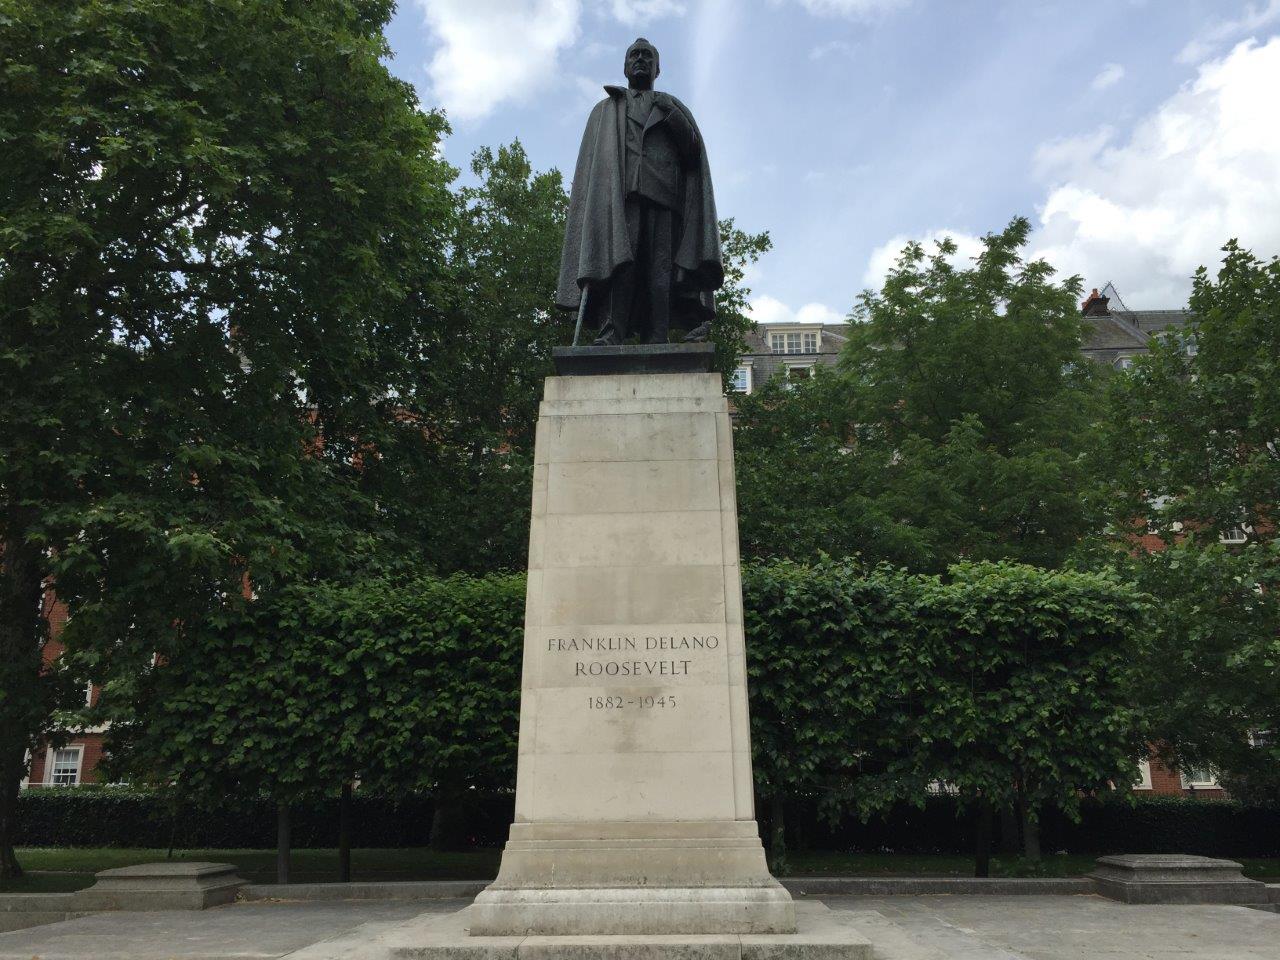 Franklin D. Roosevelt monument in London